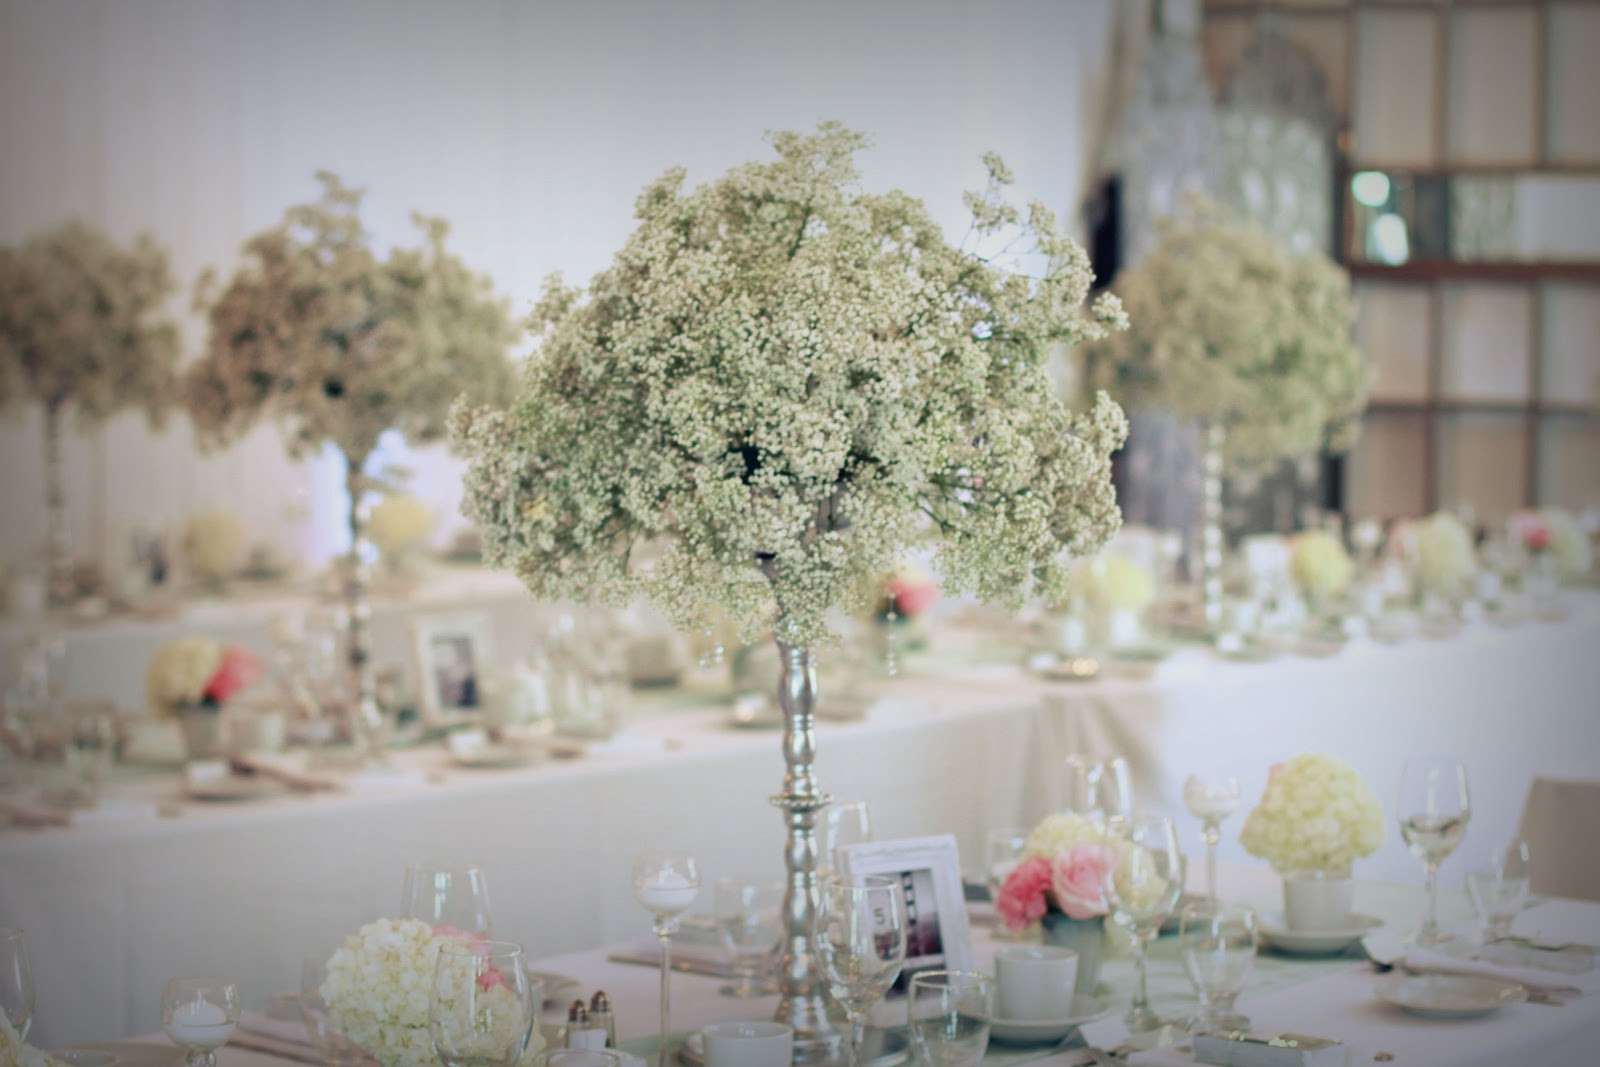 DIY Wedding Floral Centerpieces
 DIY Wedding Centerpieces Harlow & Thistle Home Design